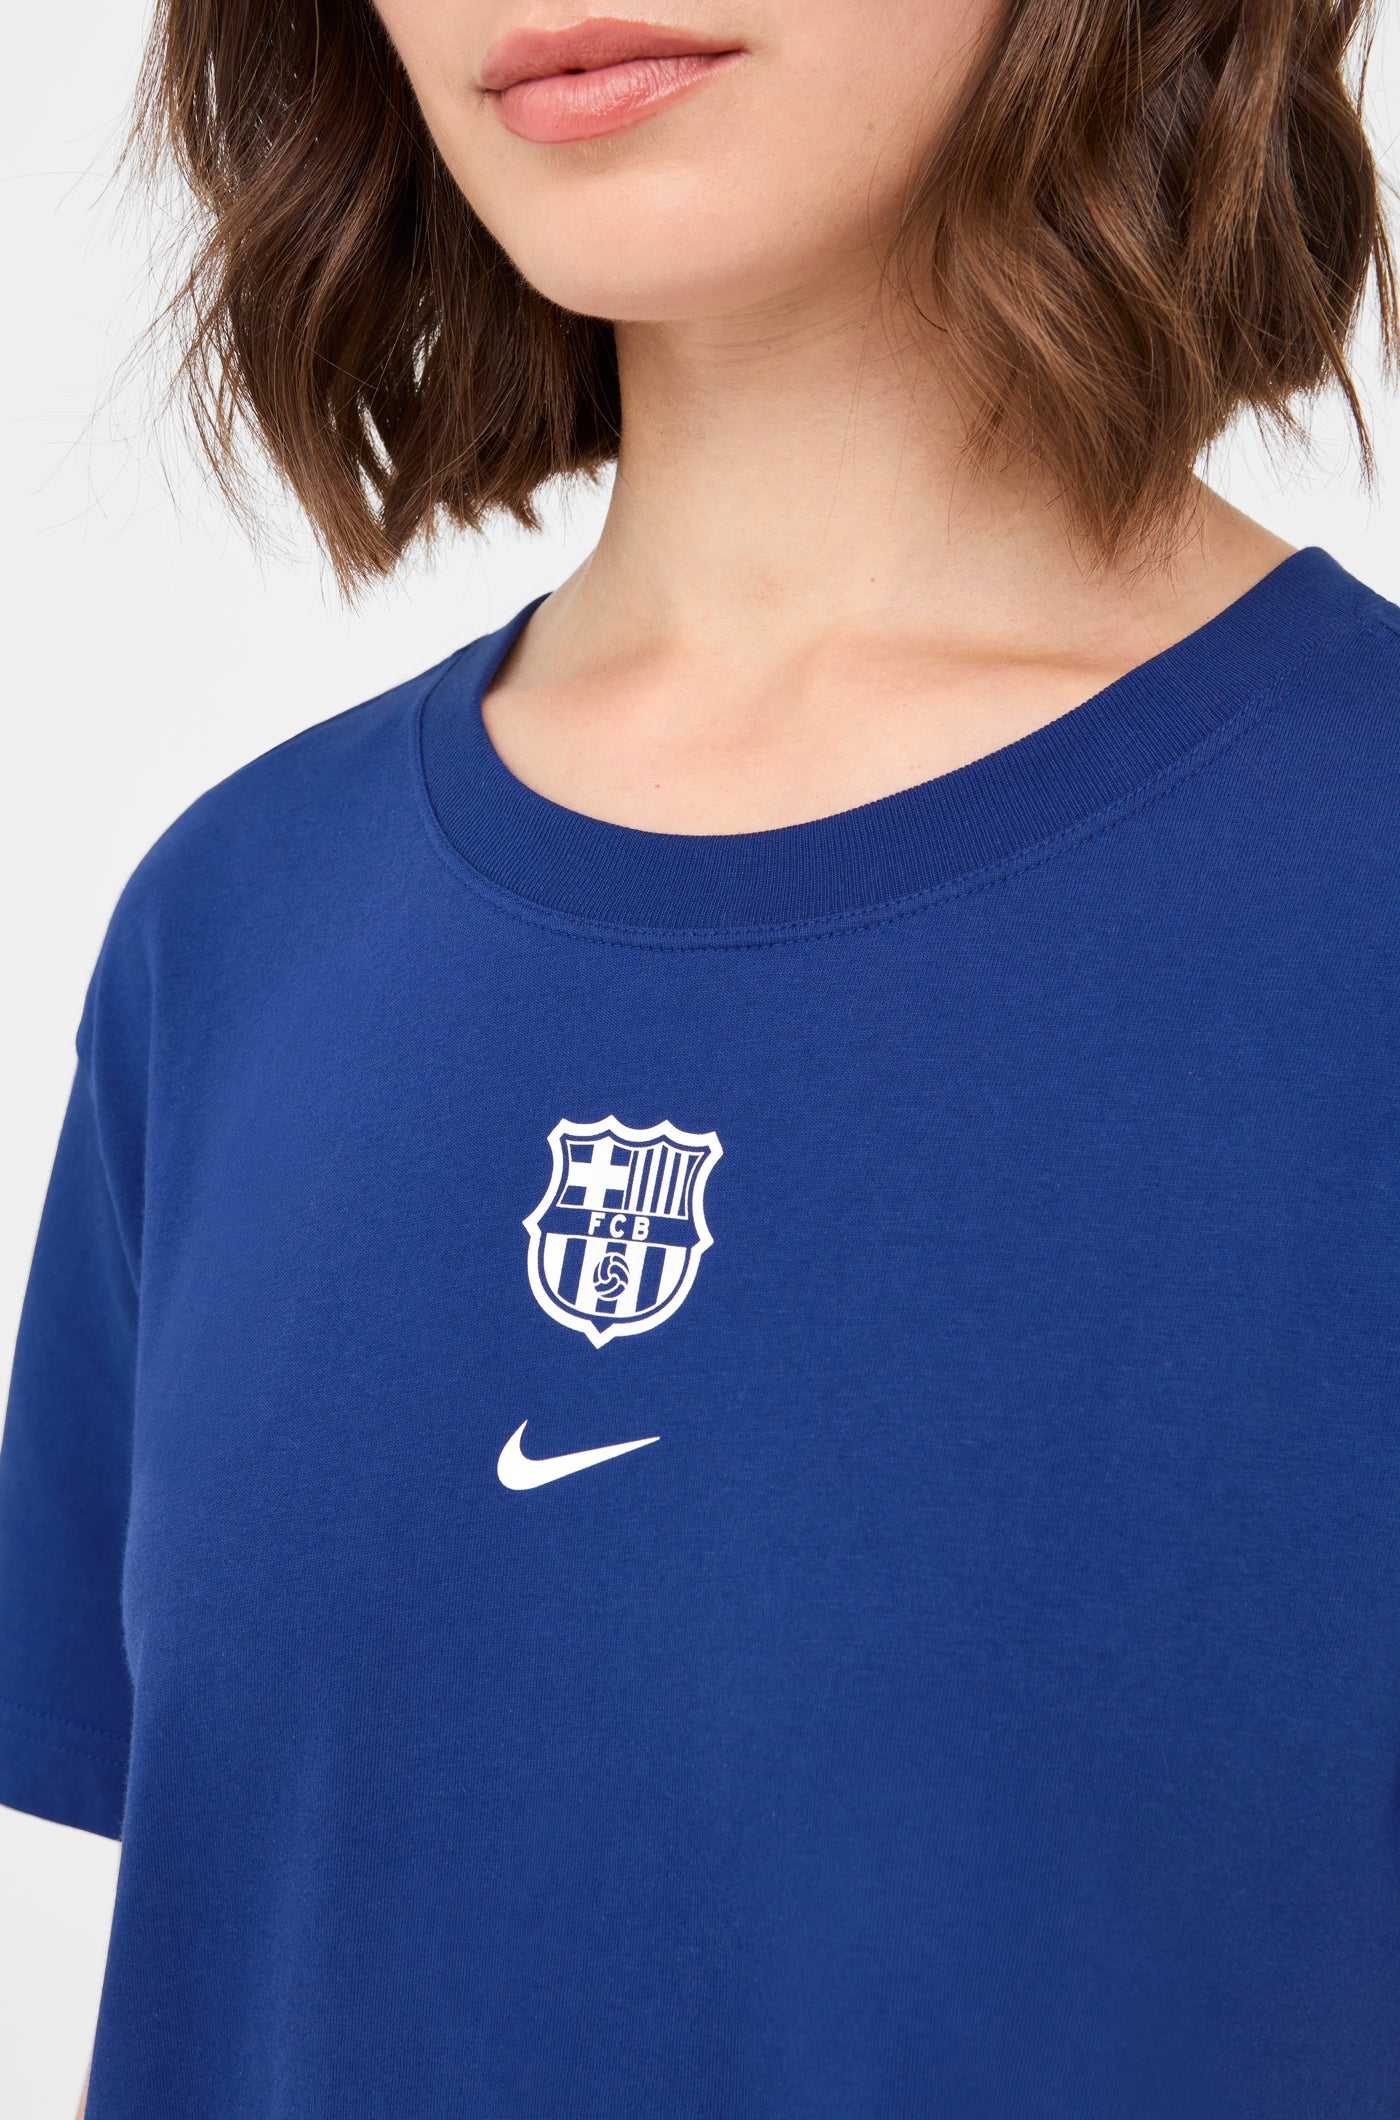 Crop top blue shield Barça Nike - Woman